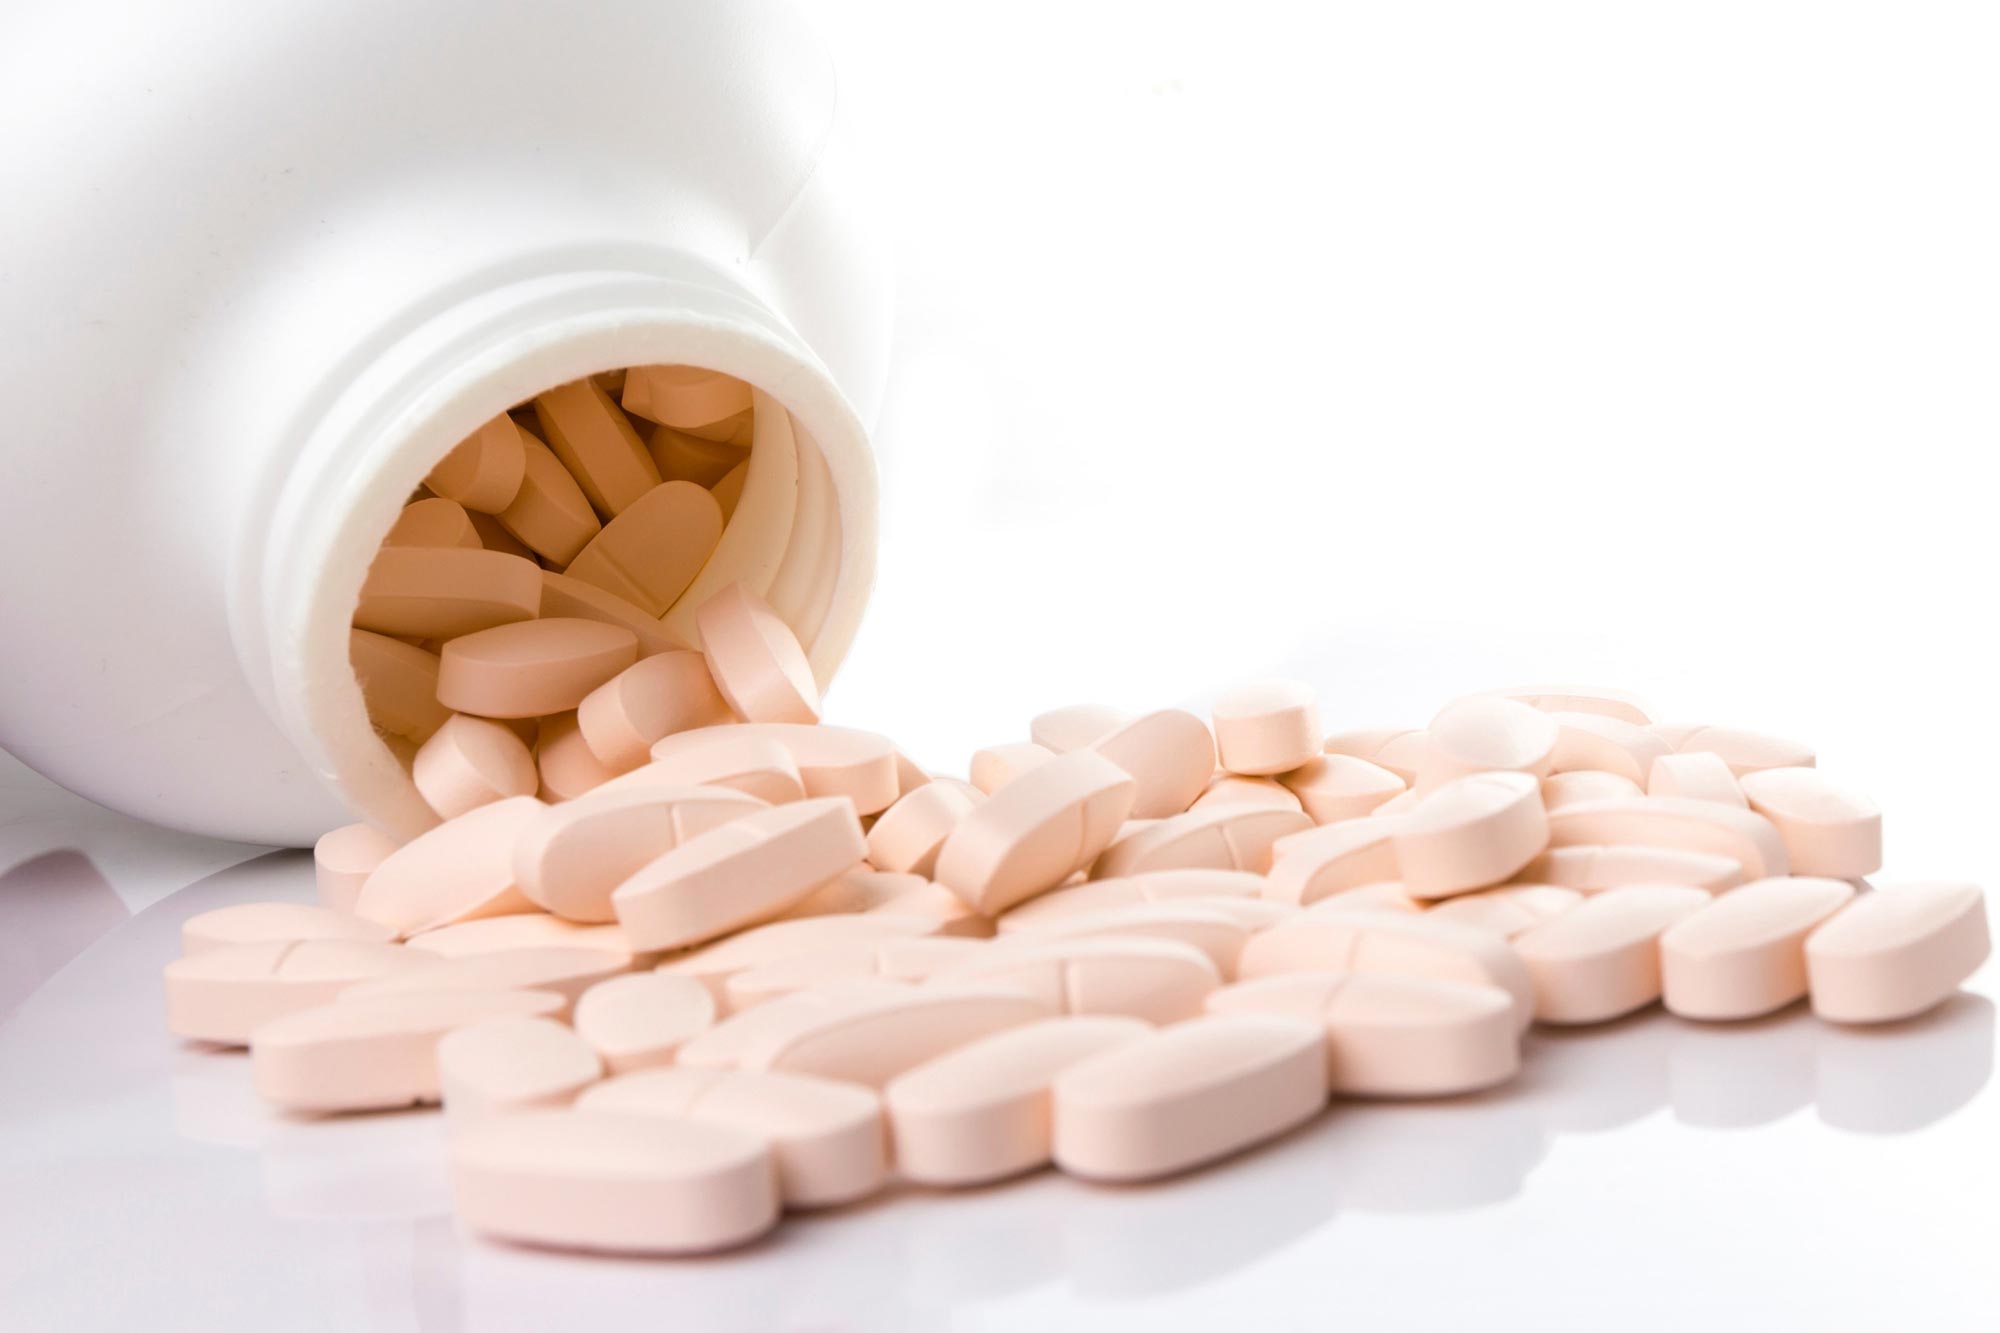 Popular vitamin supplement causes cancer risk and brain metastases